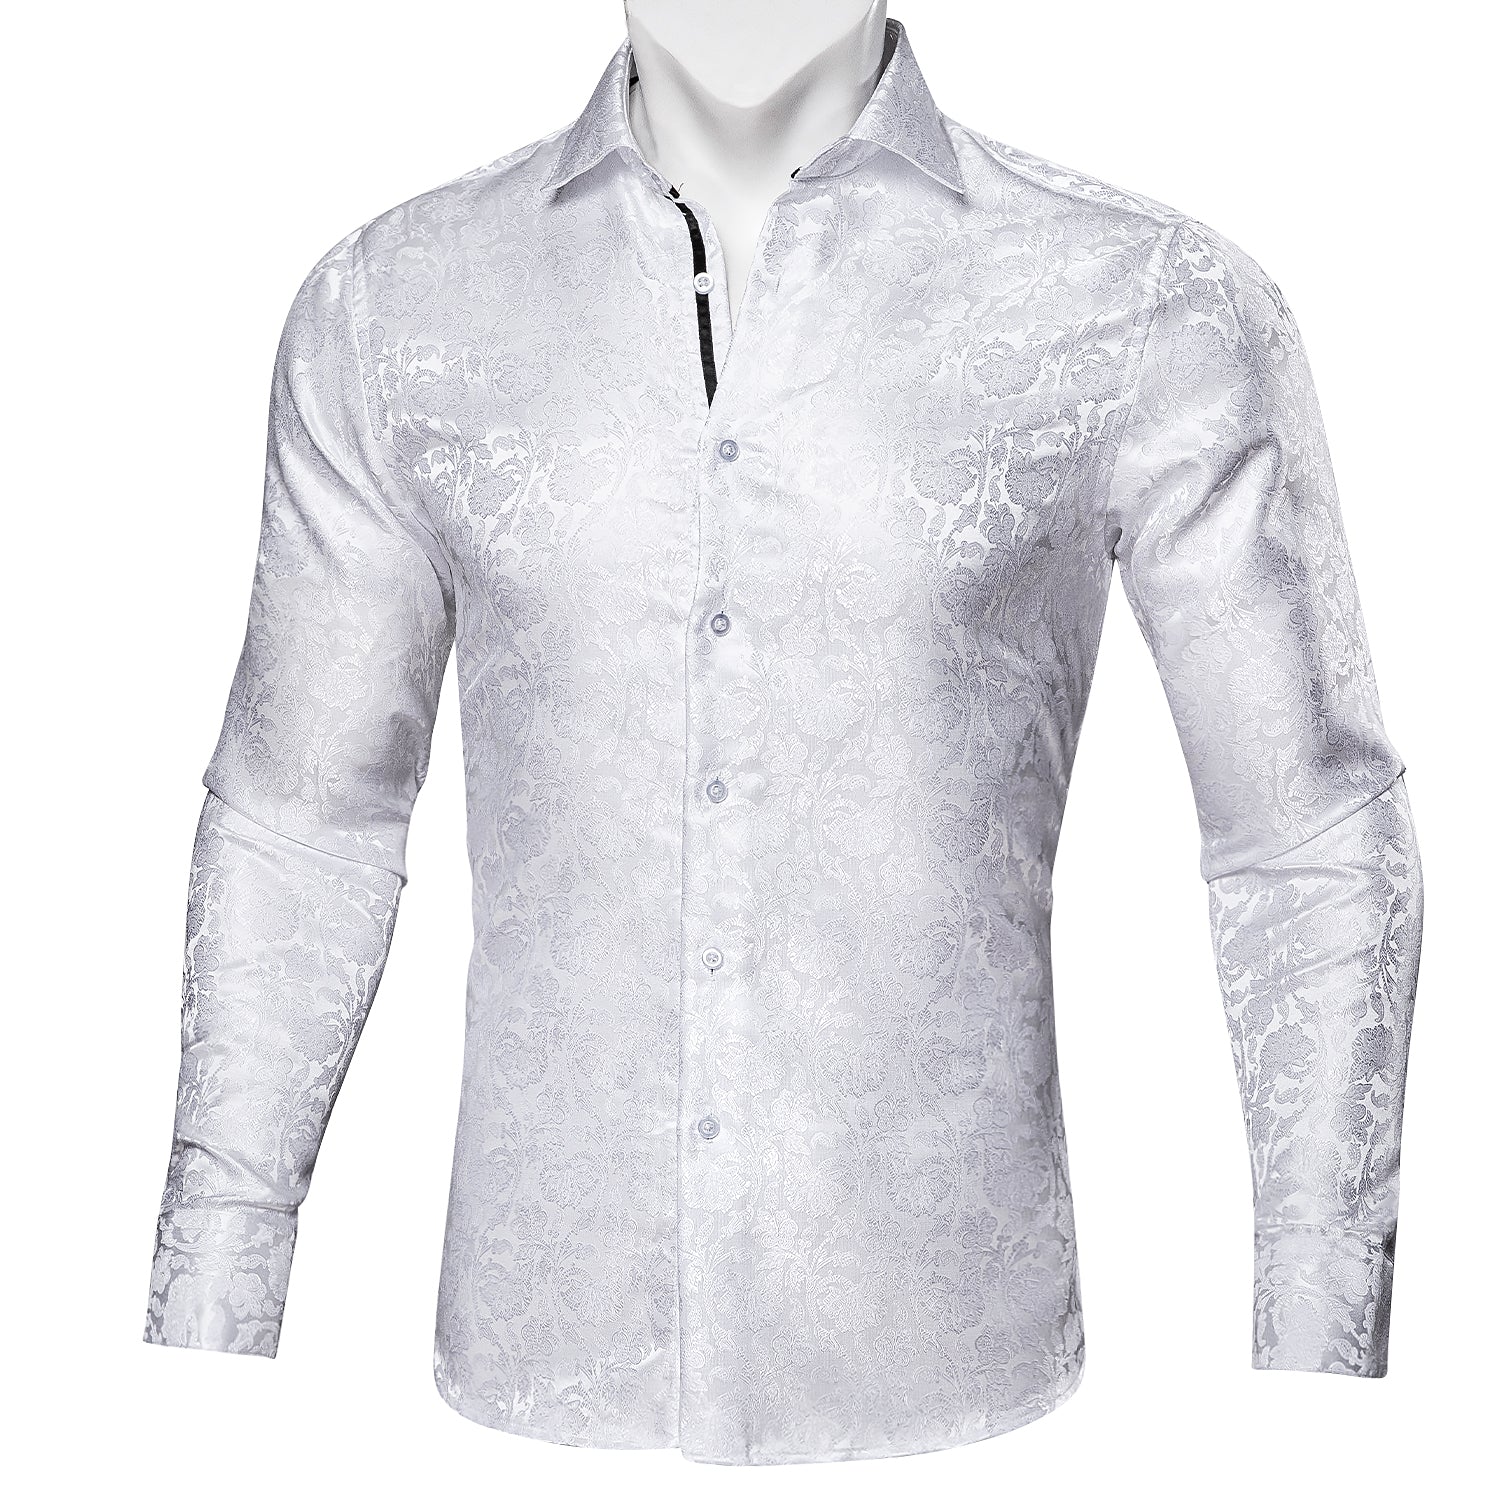 floral jacquard dress shirt white business shirt